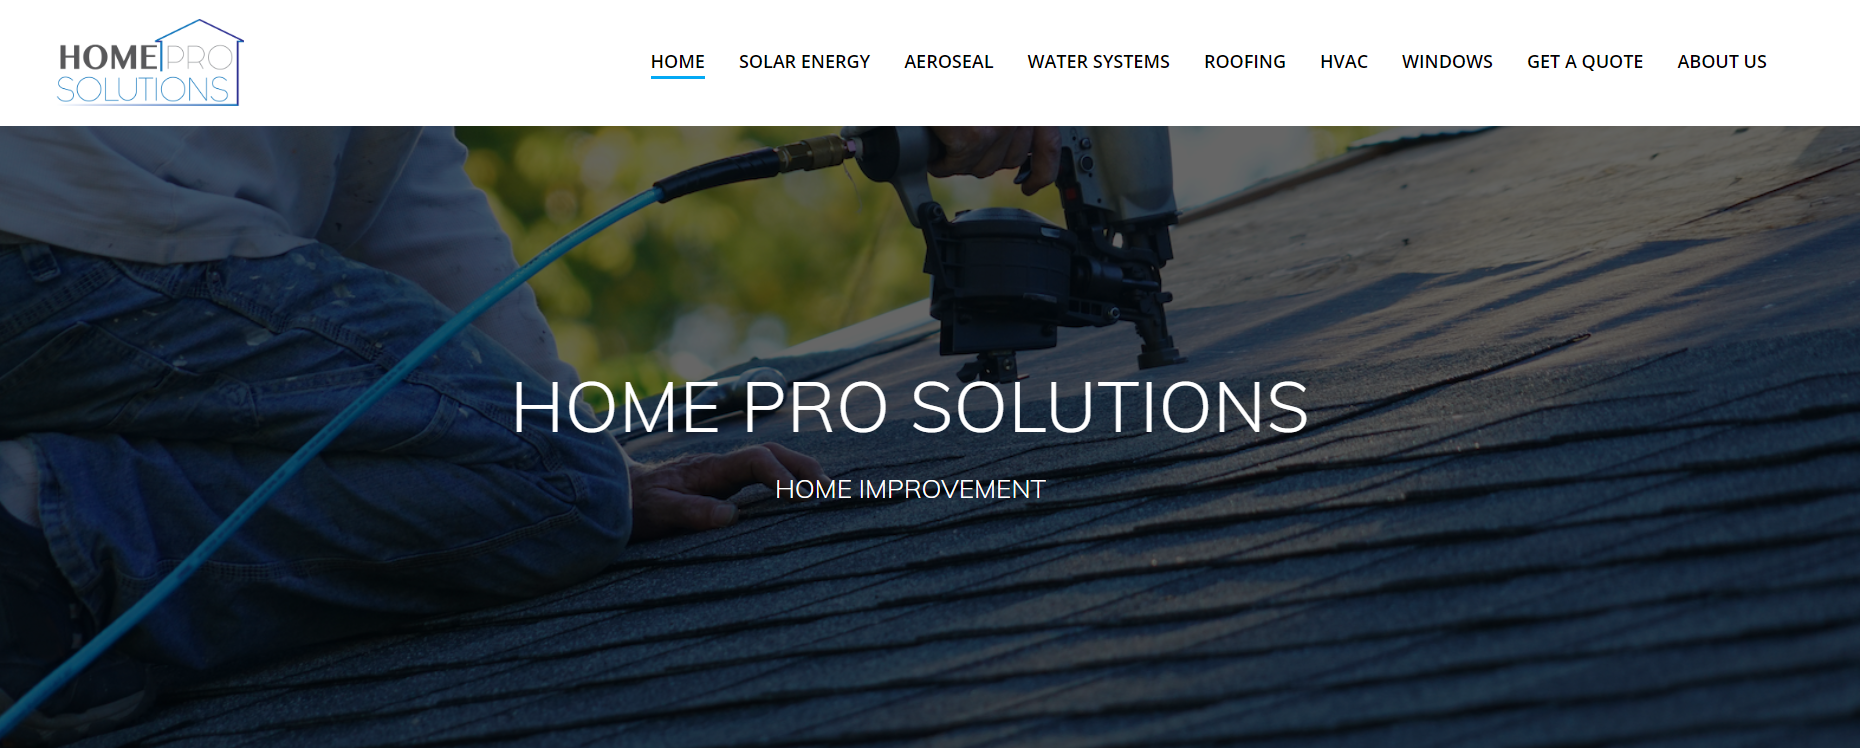 HomePro Solutions - Profit Margin case study